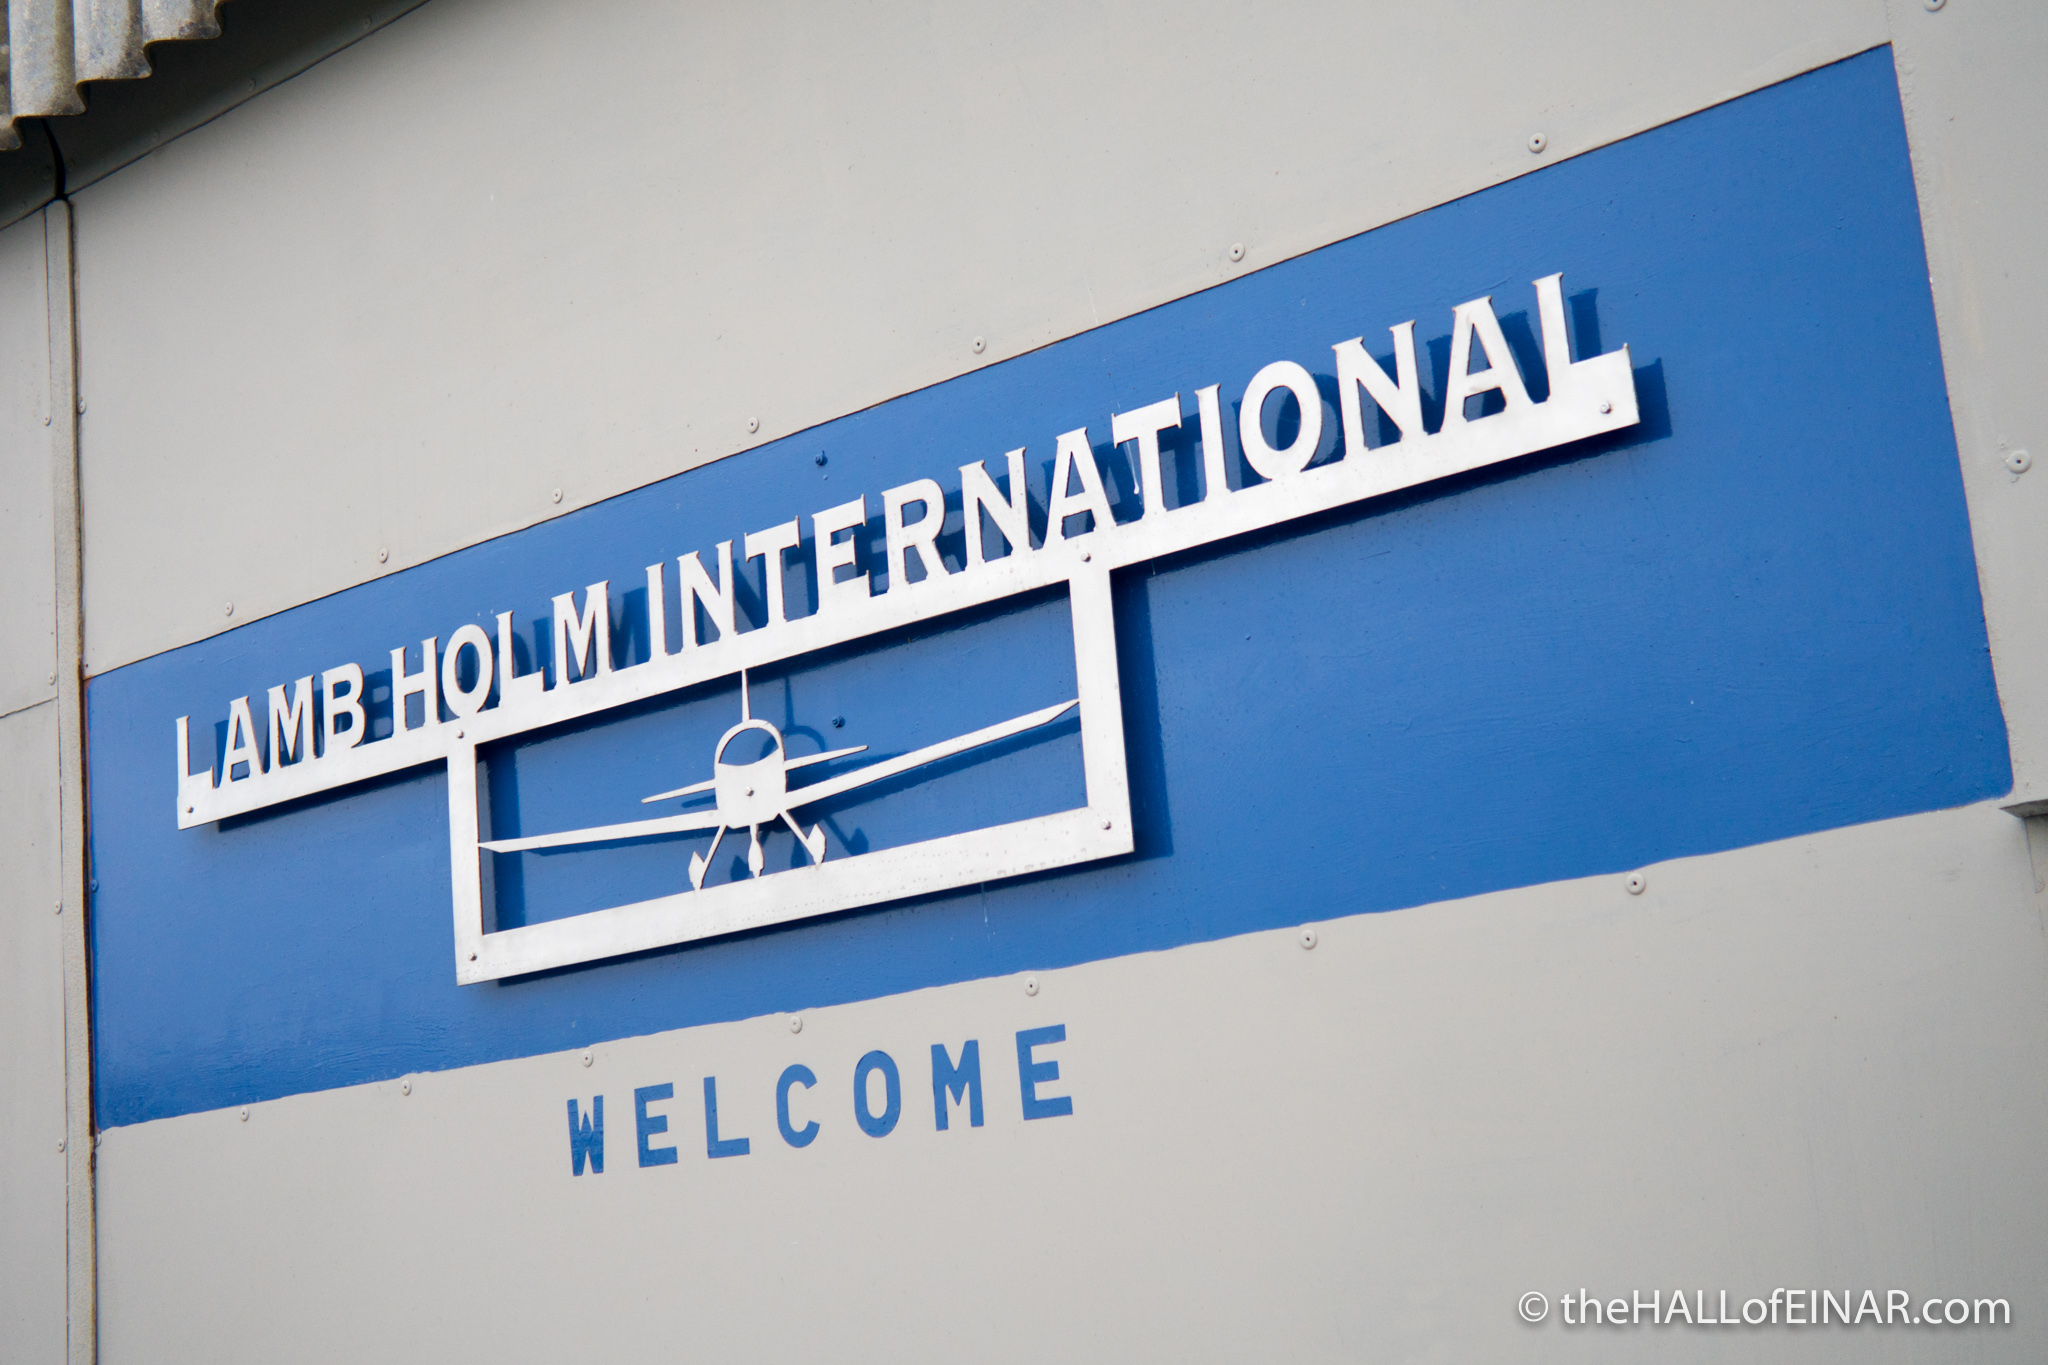 Lamb Holm International Airport